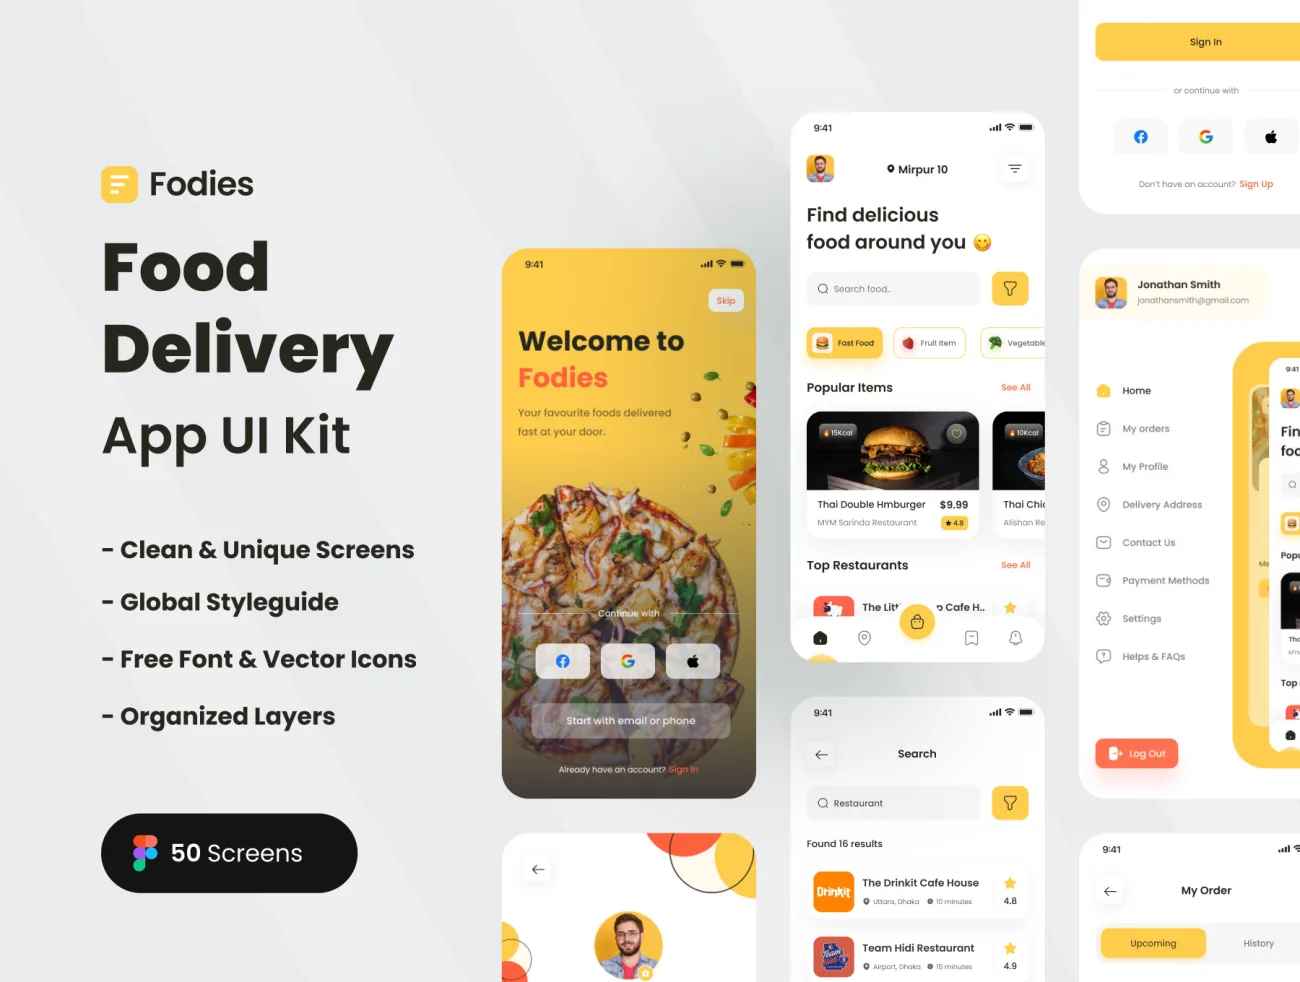 Fodies-食品配送手机应用程序UI套件 Fodies - Food Delivery App UI Kit缩略图到位啦UI